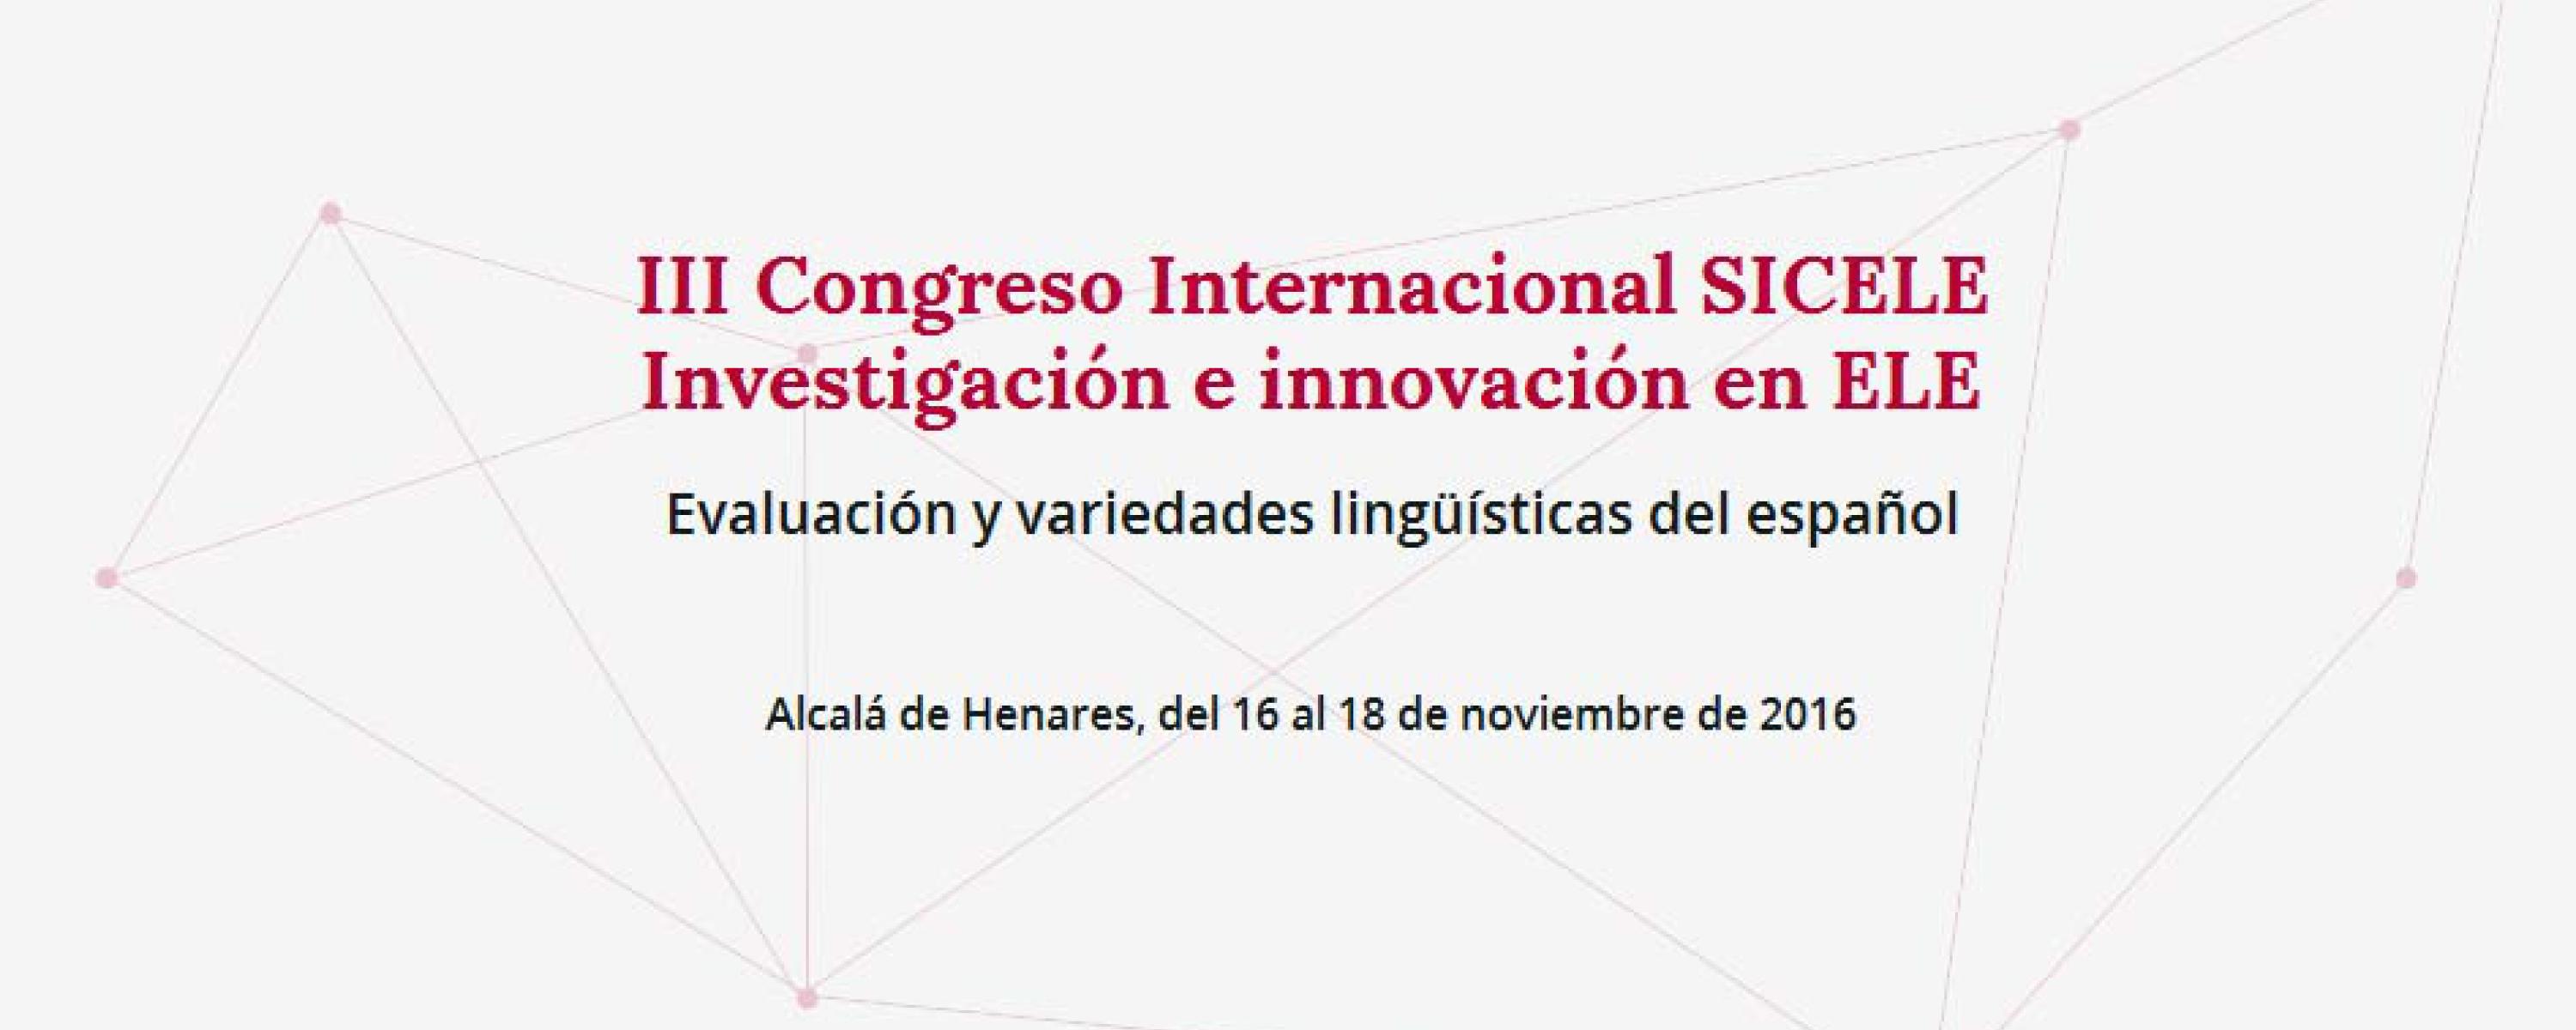 Congreso Sicele 2016 (Alcalá de Henares)